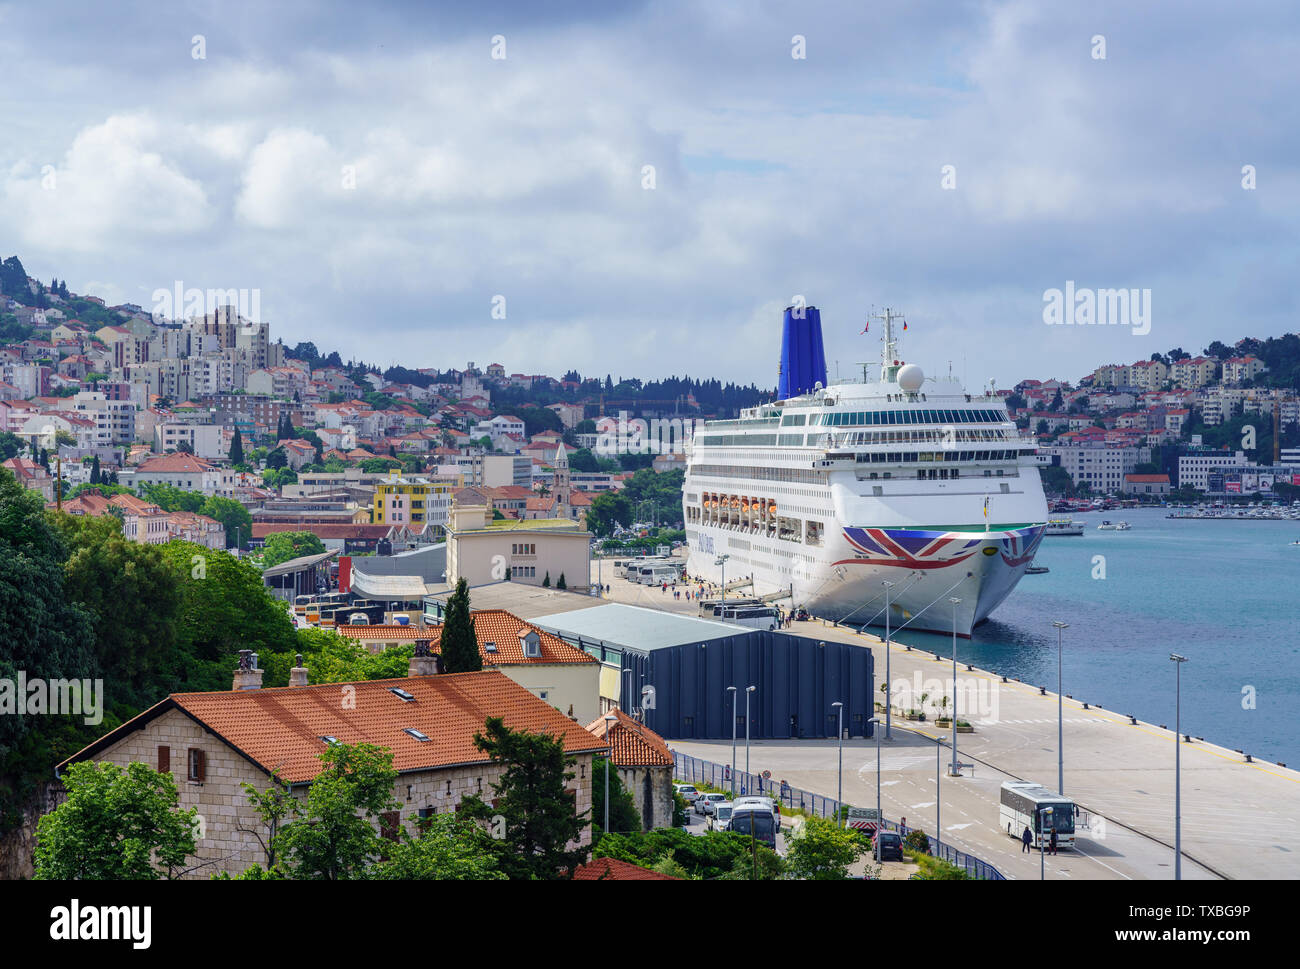 P and O cruises cruise ship Oriana in the port of Dubrovnik in Croatia Stock Photo